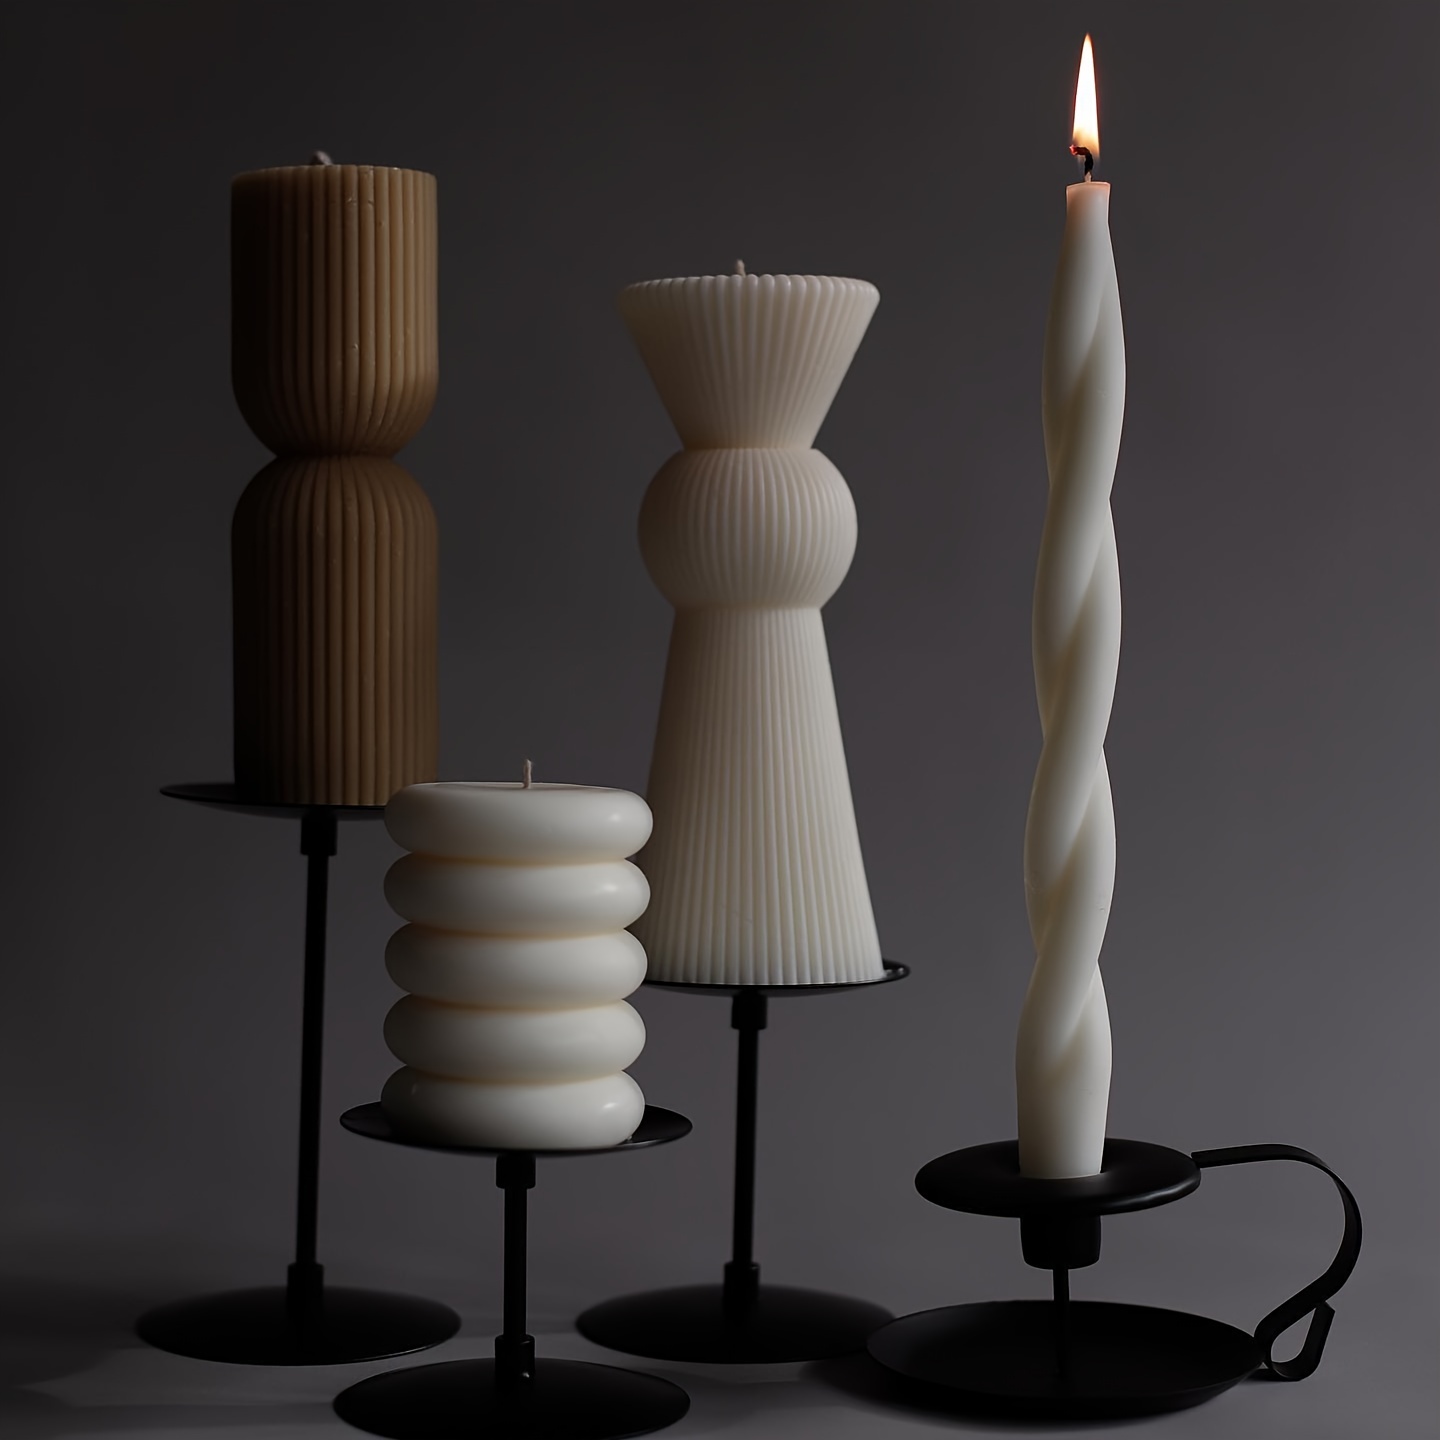 Paquete de 2 moldes para velas cónicas en espiral, molde de silicona  clásico para hacer velas de mesa, molde de pilar para cena a la luz de las  velas